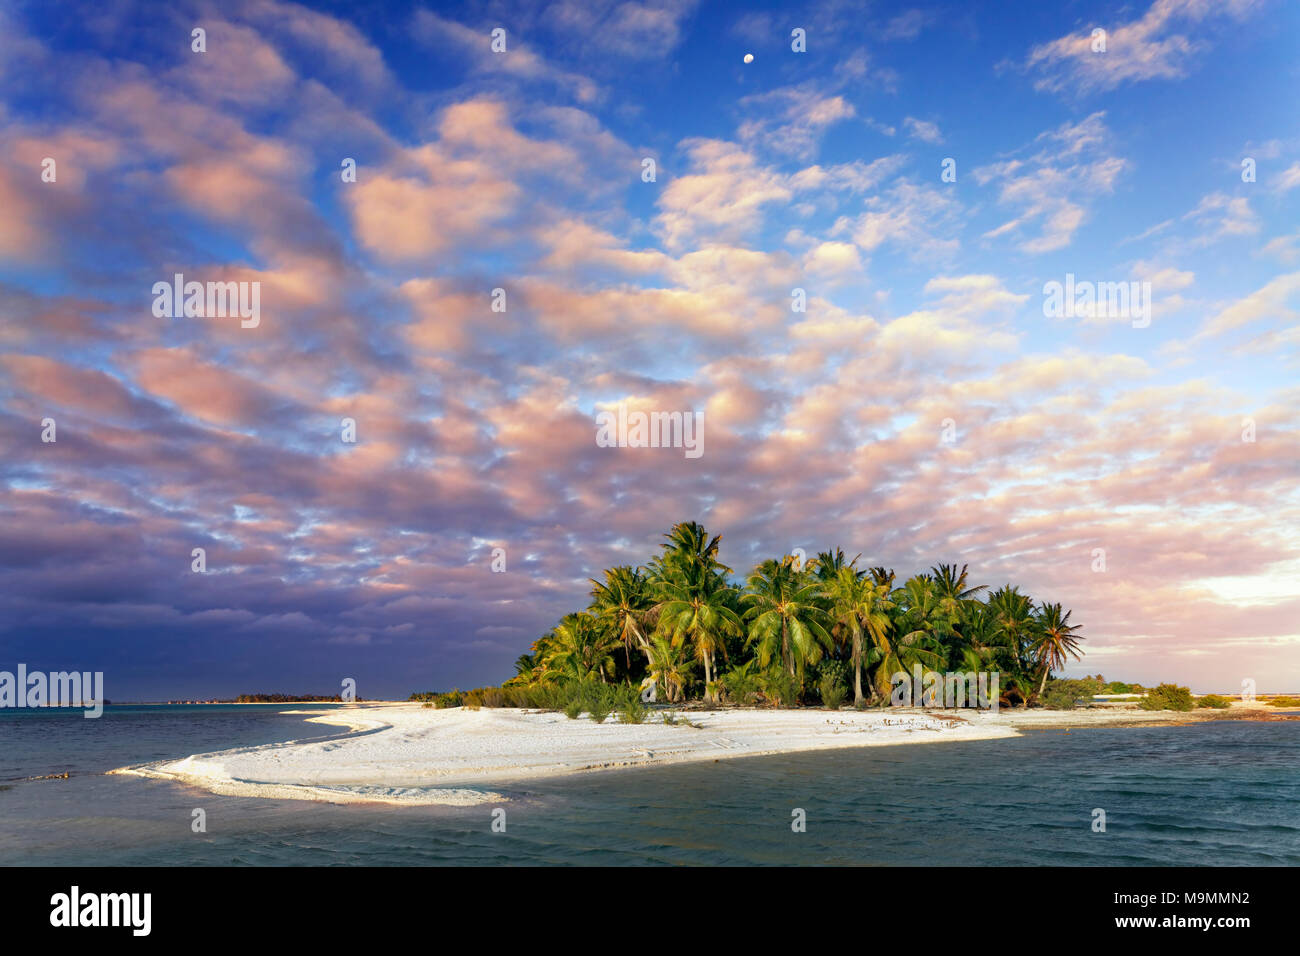 Isla Desierta, playa con palmeras, nubes, sol, Tikehau Atolón Archipiélago Tuamotu, las Islas de la sociedad, Islas de Barlovento Foto de stock